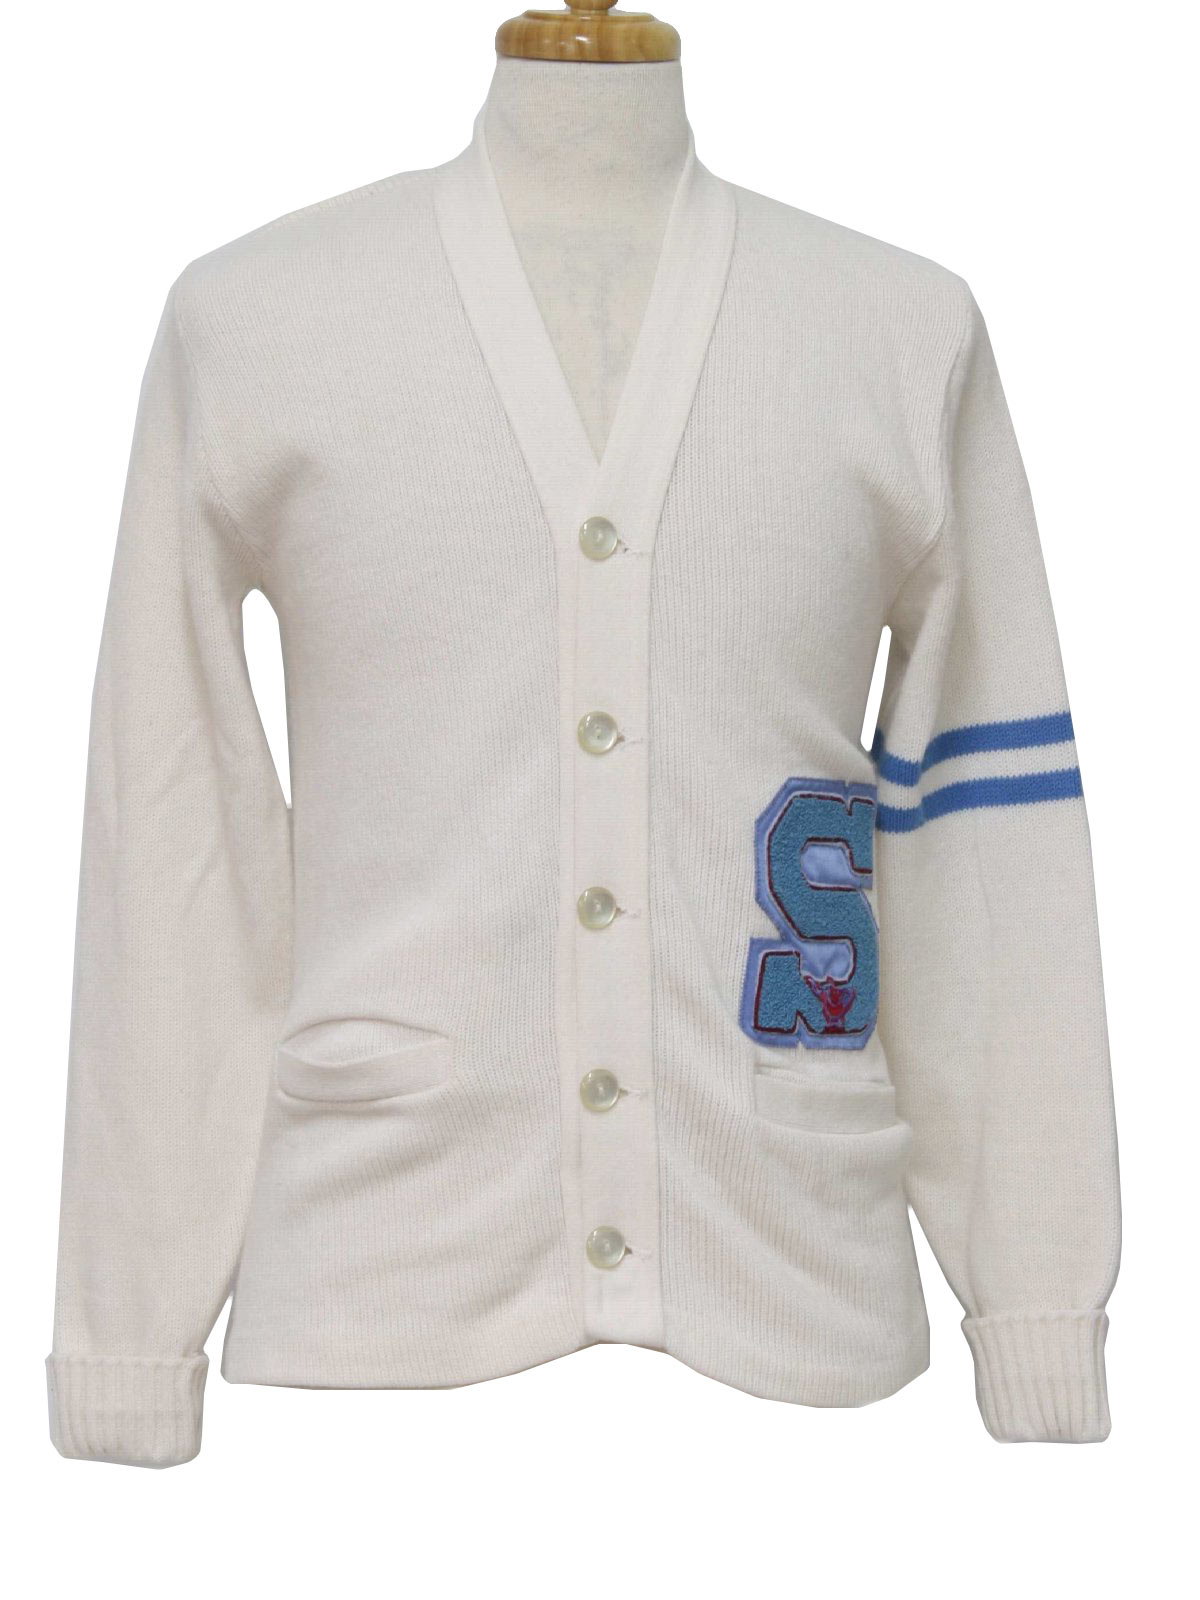 Retro 1970's Caridgan Sweater (Bristol) : 70s -Bristol- Unisex white ...